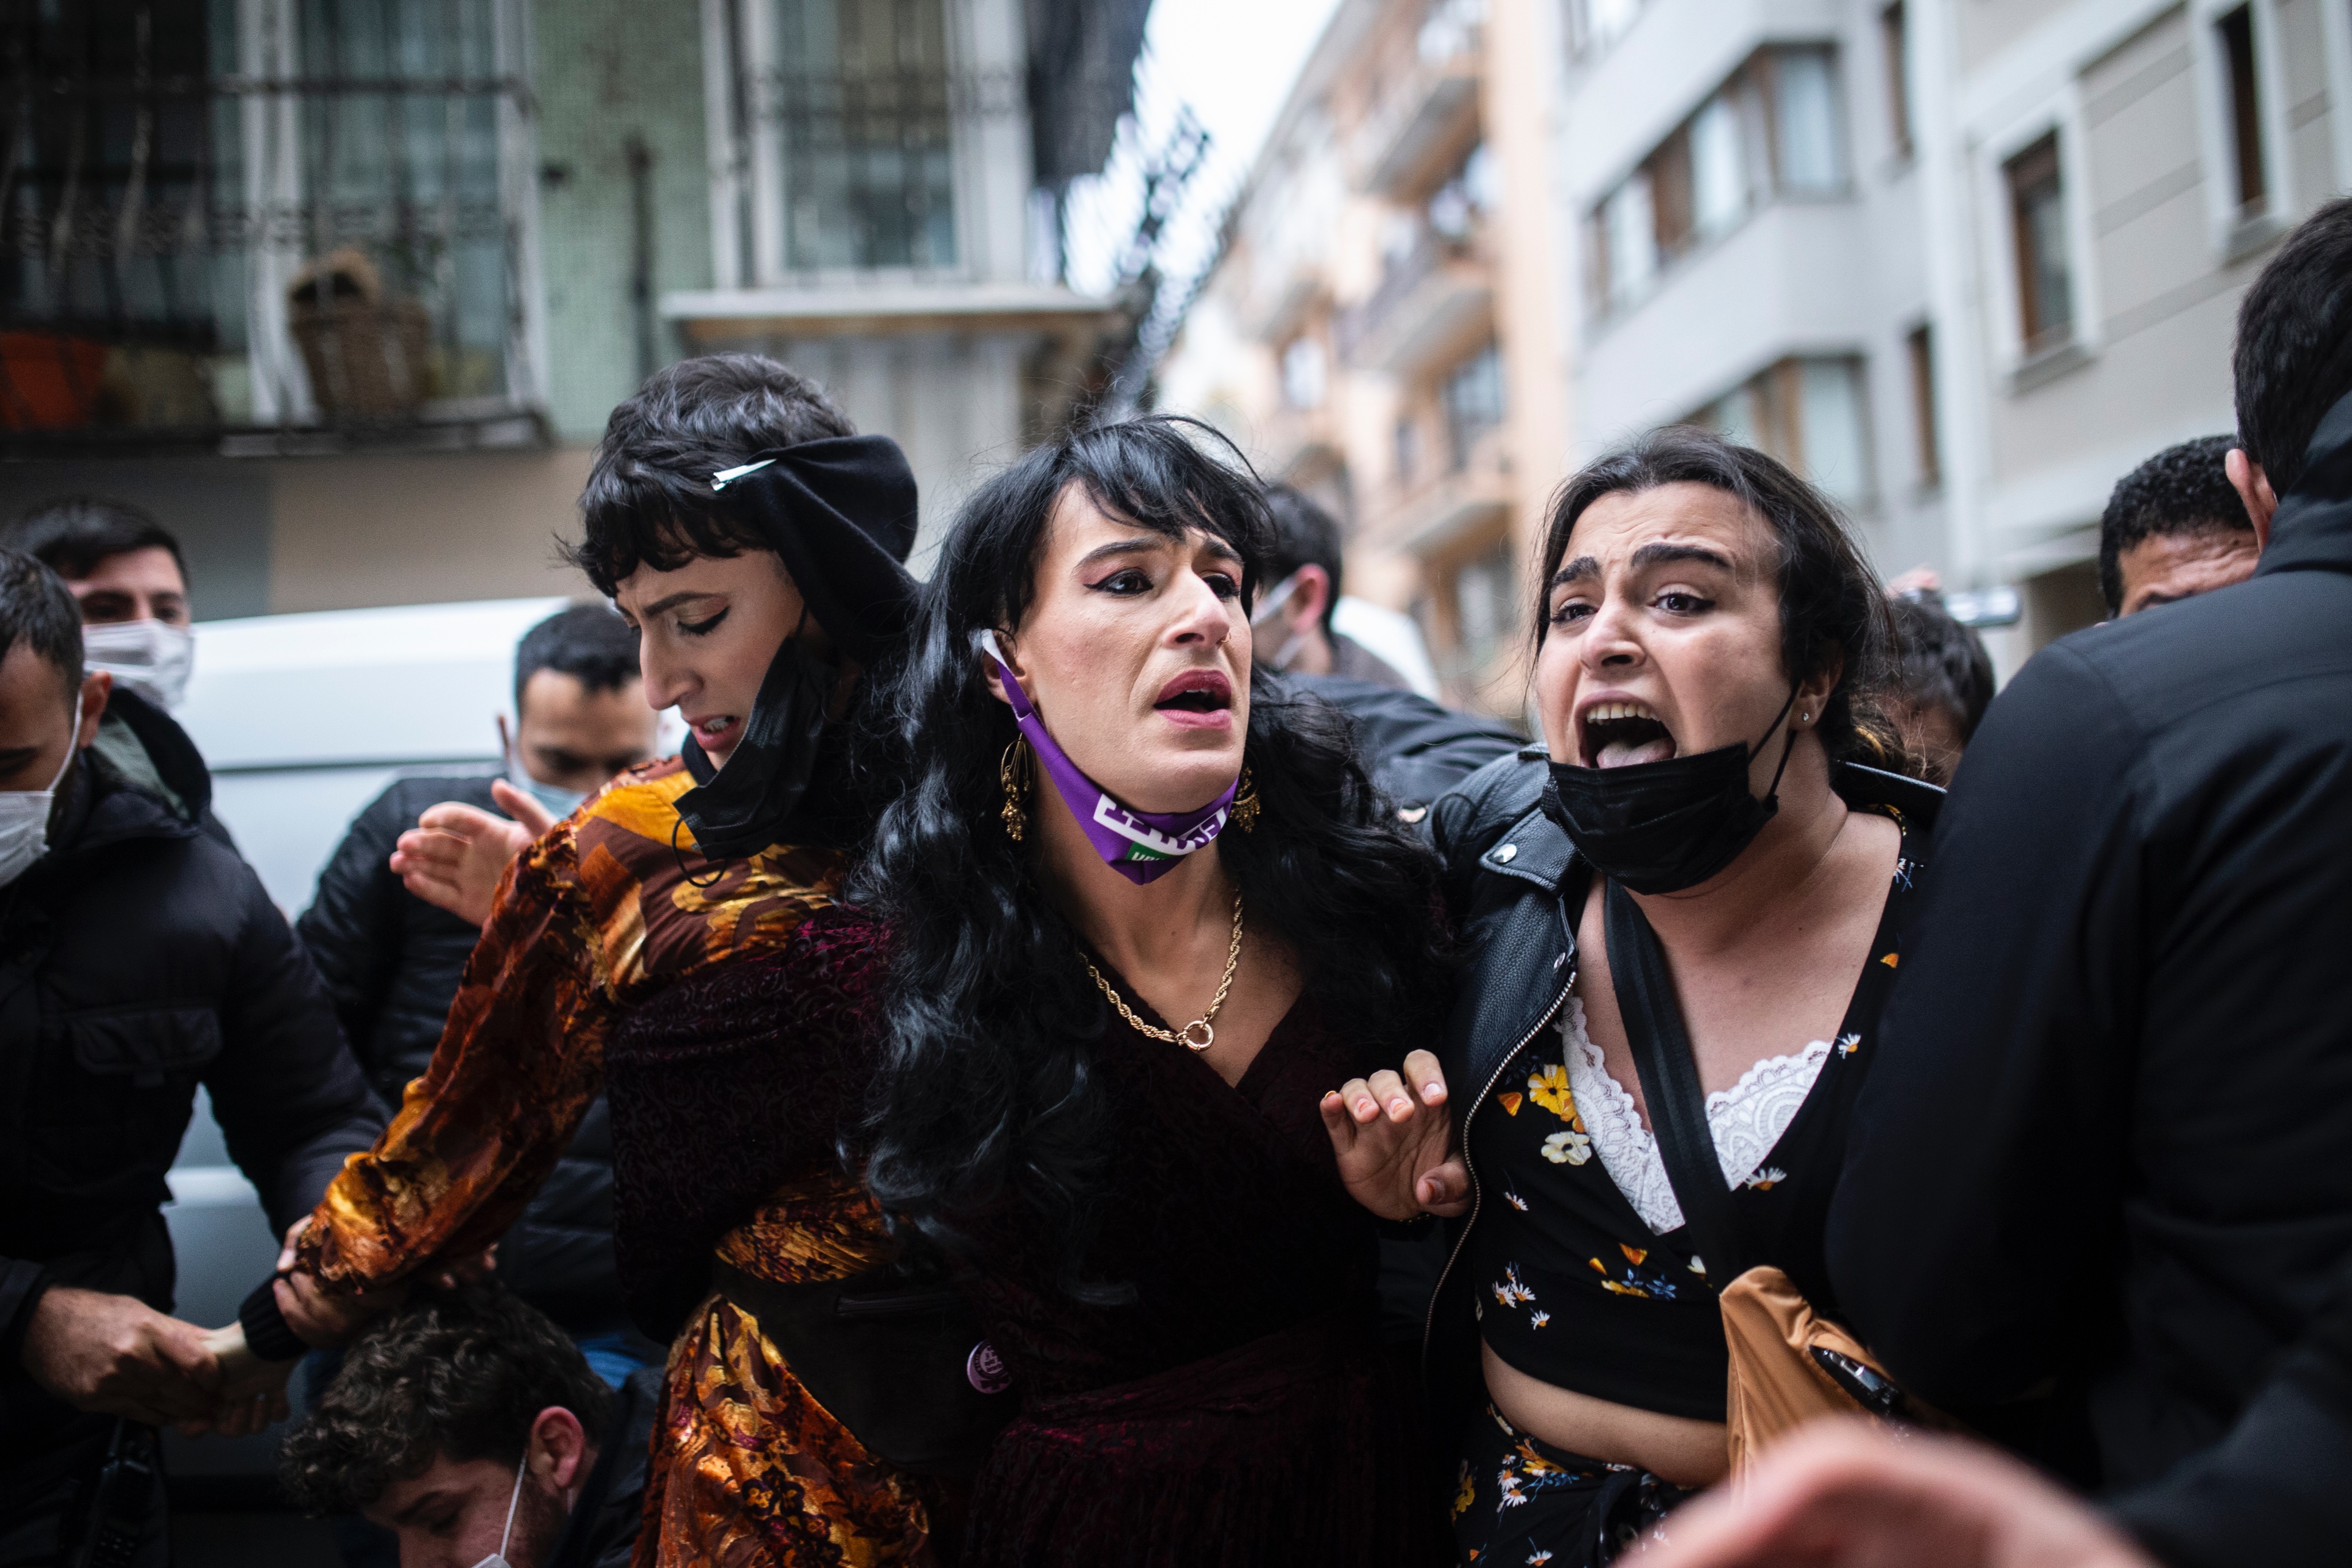 8 Mart eyleminin ardından trans kadınlar gözaltına alındı! | Kaos GL - LGBTİ+ Haber Portalı